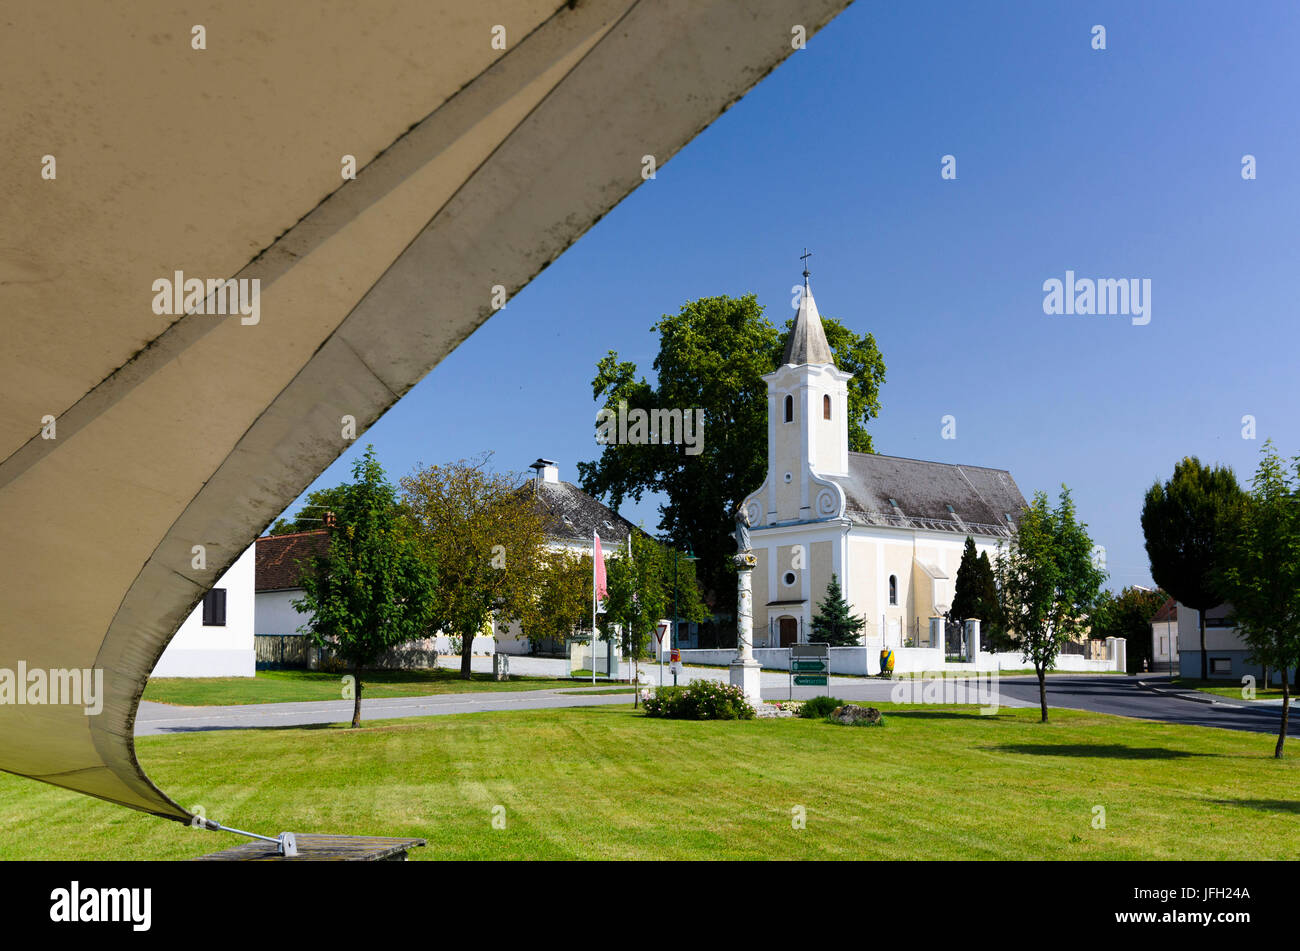 Solar leech of the burgenländischen story (n) of house and Catholic parish church holy Vitus, Austria, Burgenland, Bildein Stock Photo